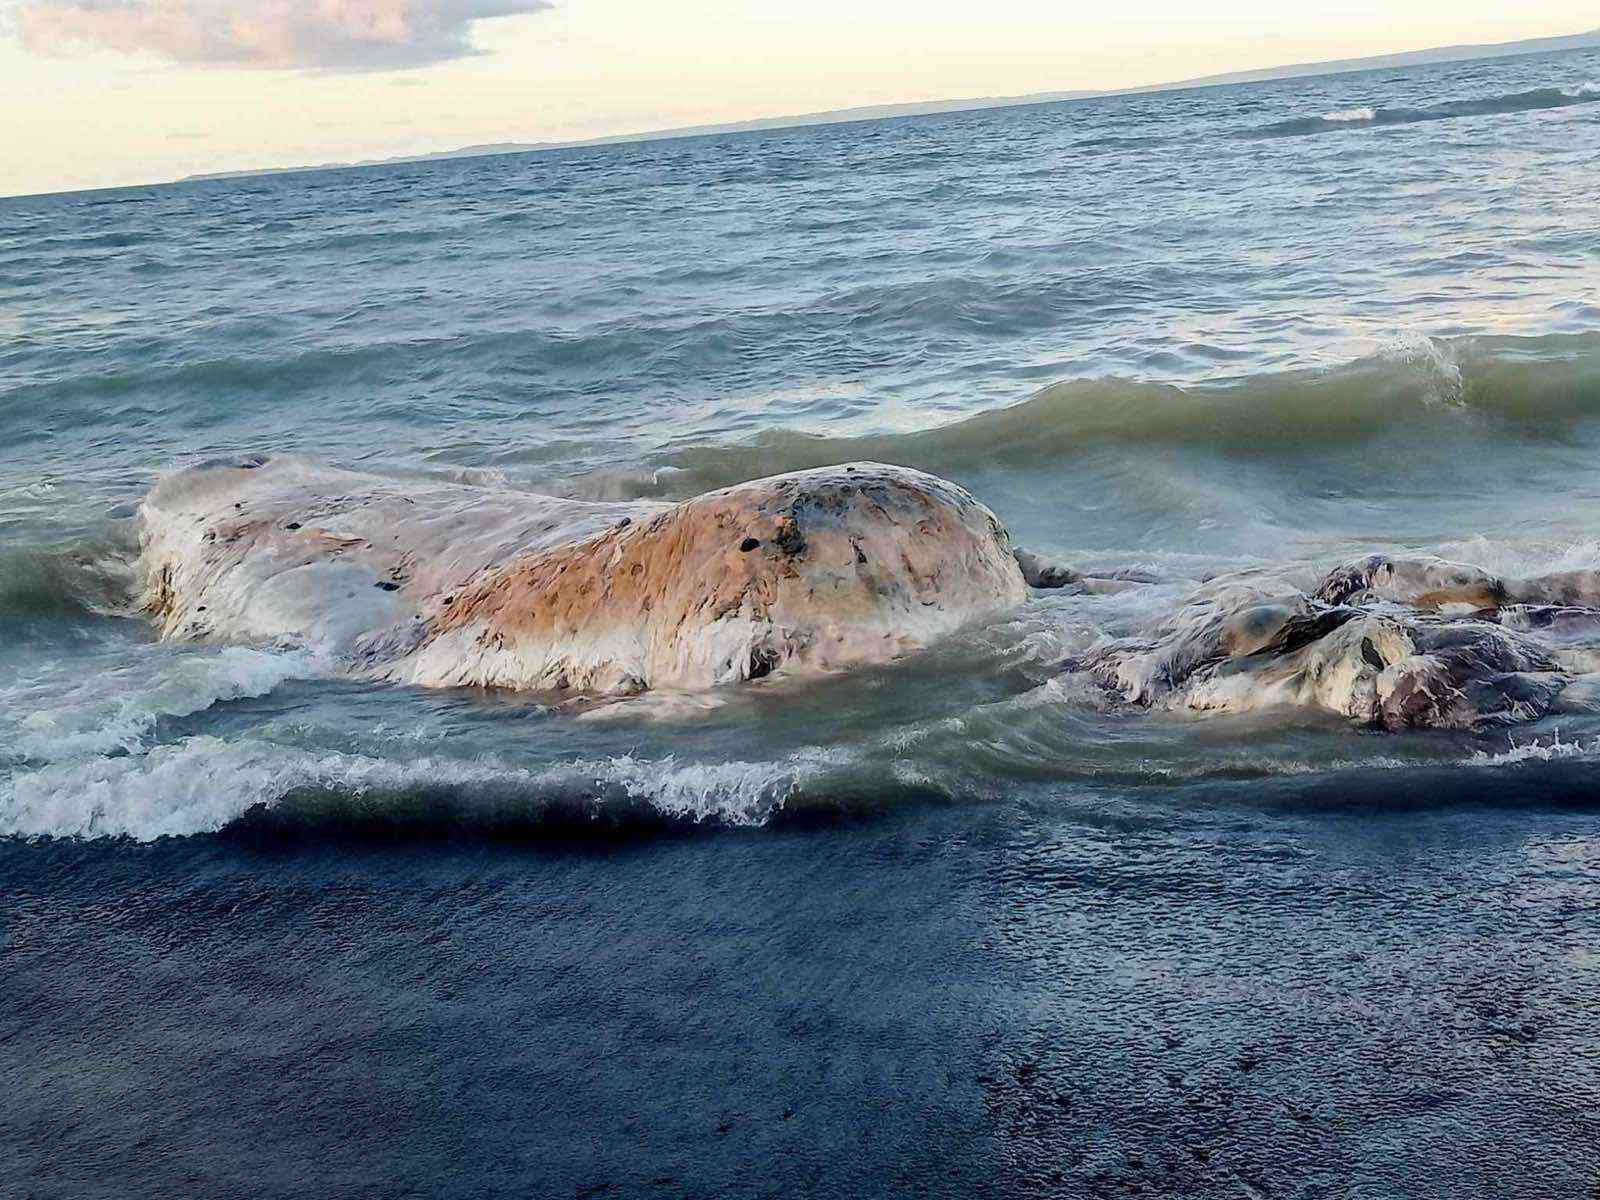 Deceased sperm whale found in Infanta, Quezon - PCG